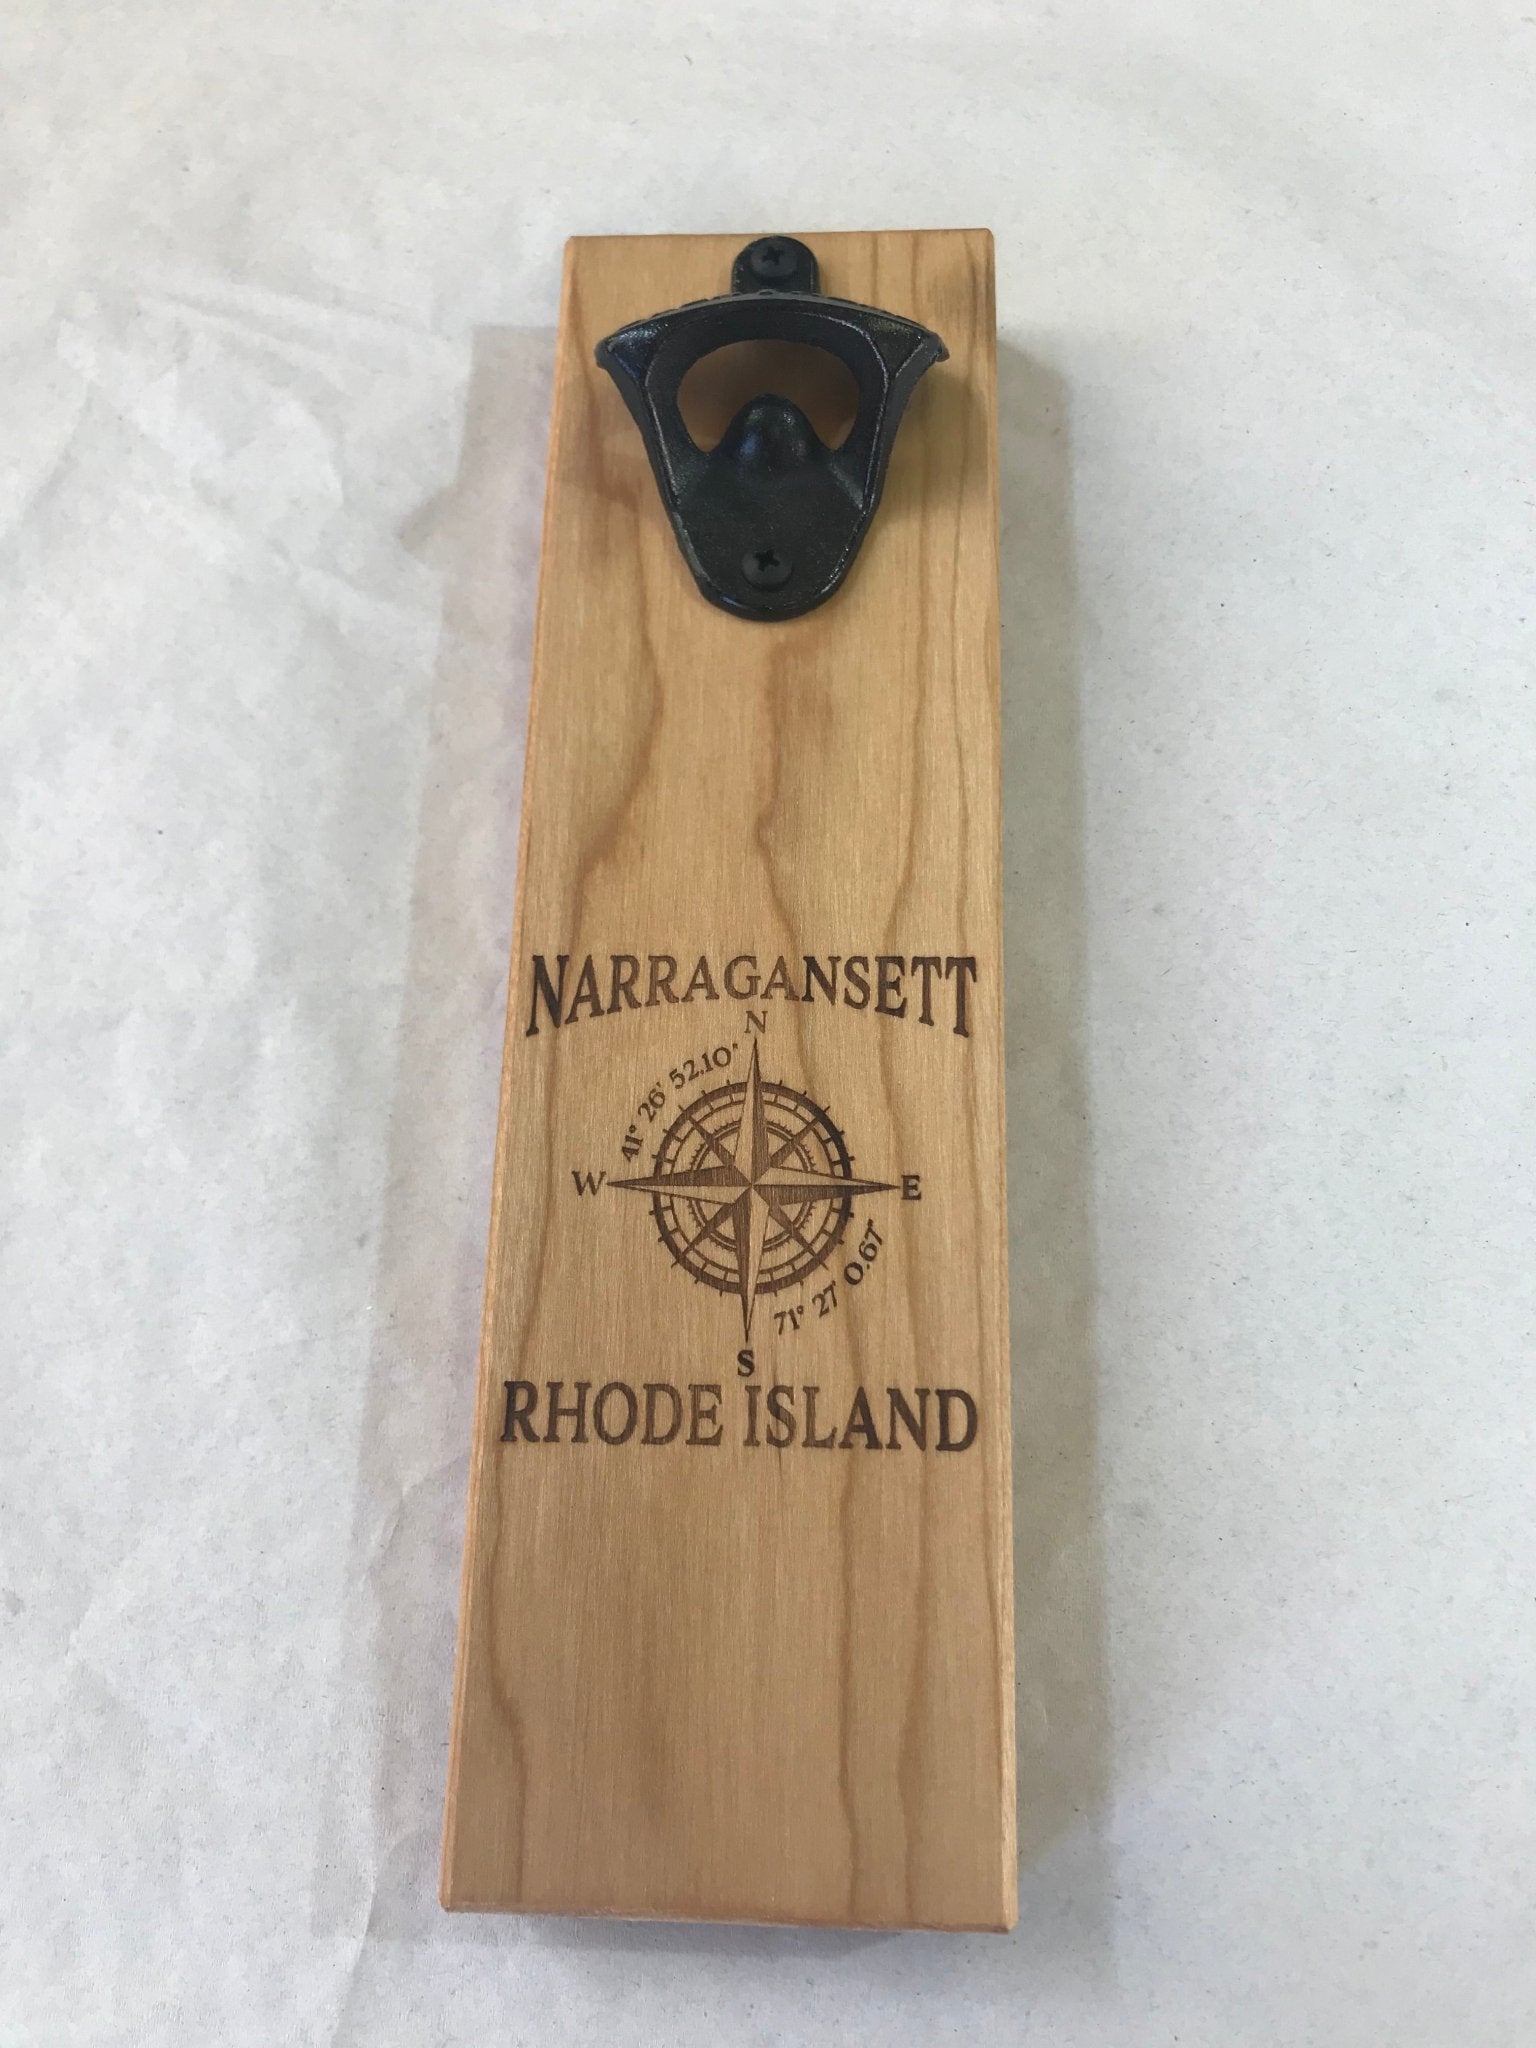 Rhode Island - Wall Mounted Bottle Opener with Cap Catcher